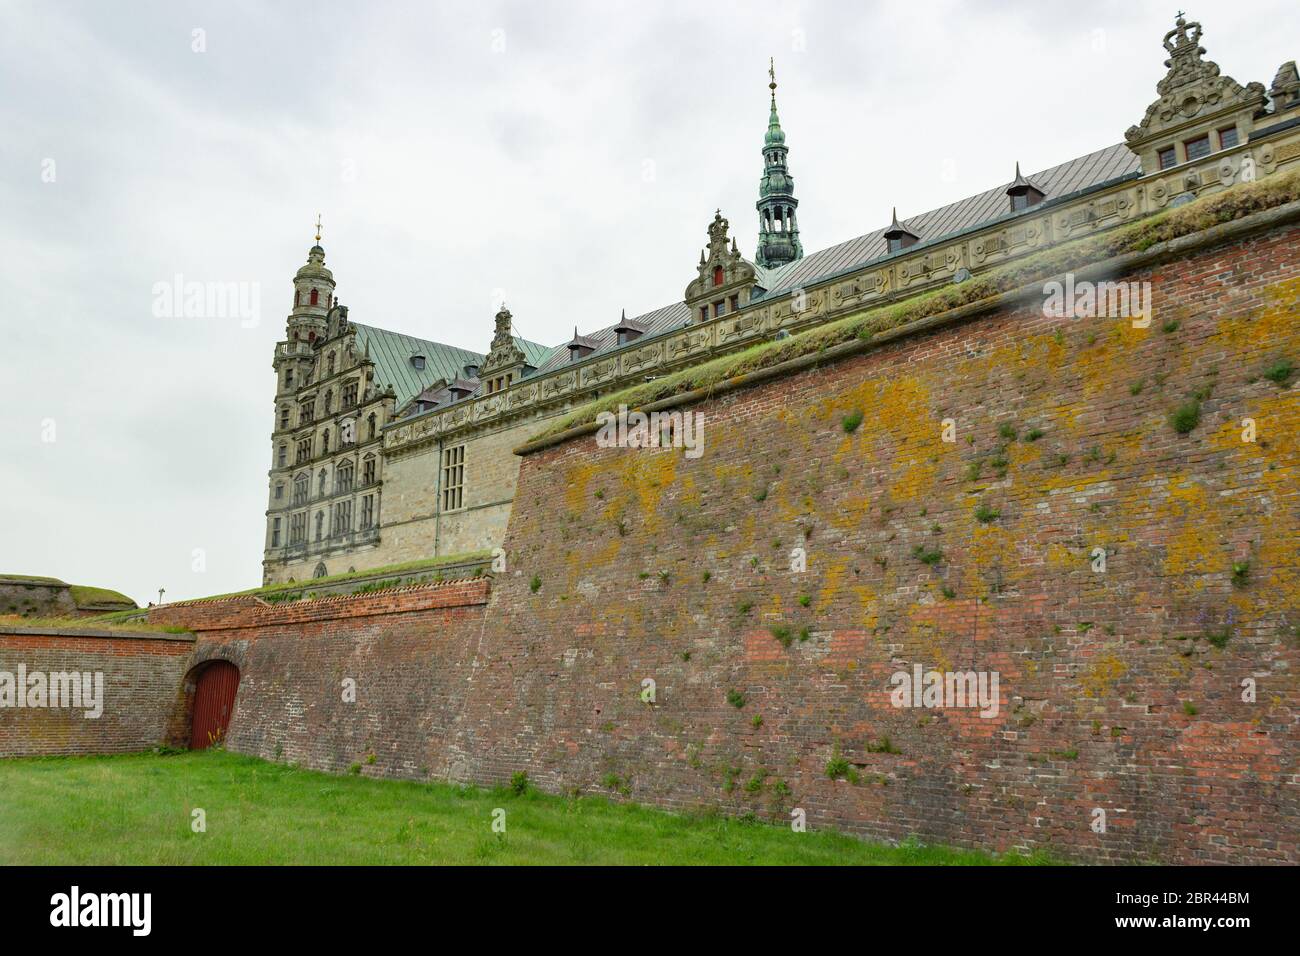 External view of Kronborg castle in Helsingor, Denmark. Kronborg is one of the most important Renaissance castles in Northern Europe. Kronborg castle, Stock Photo